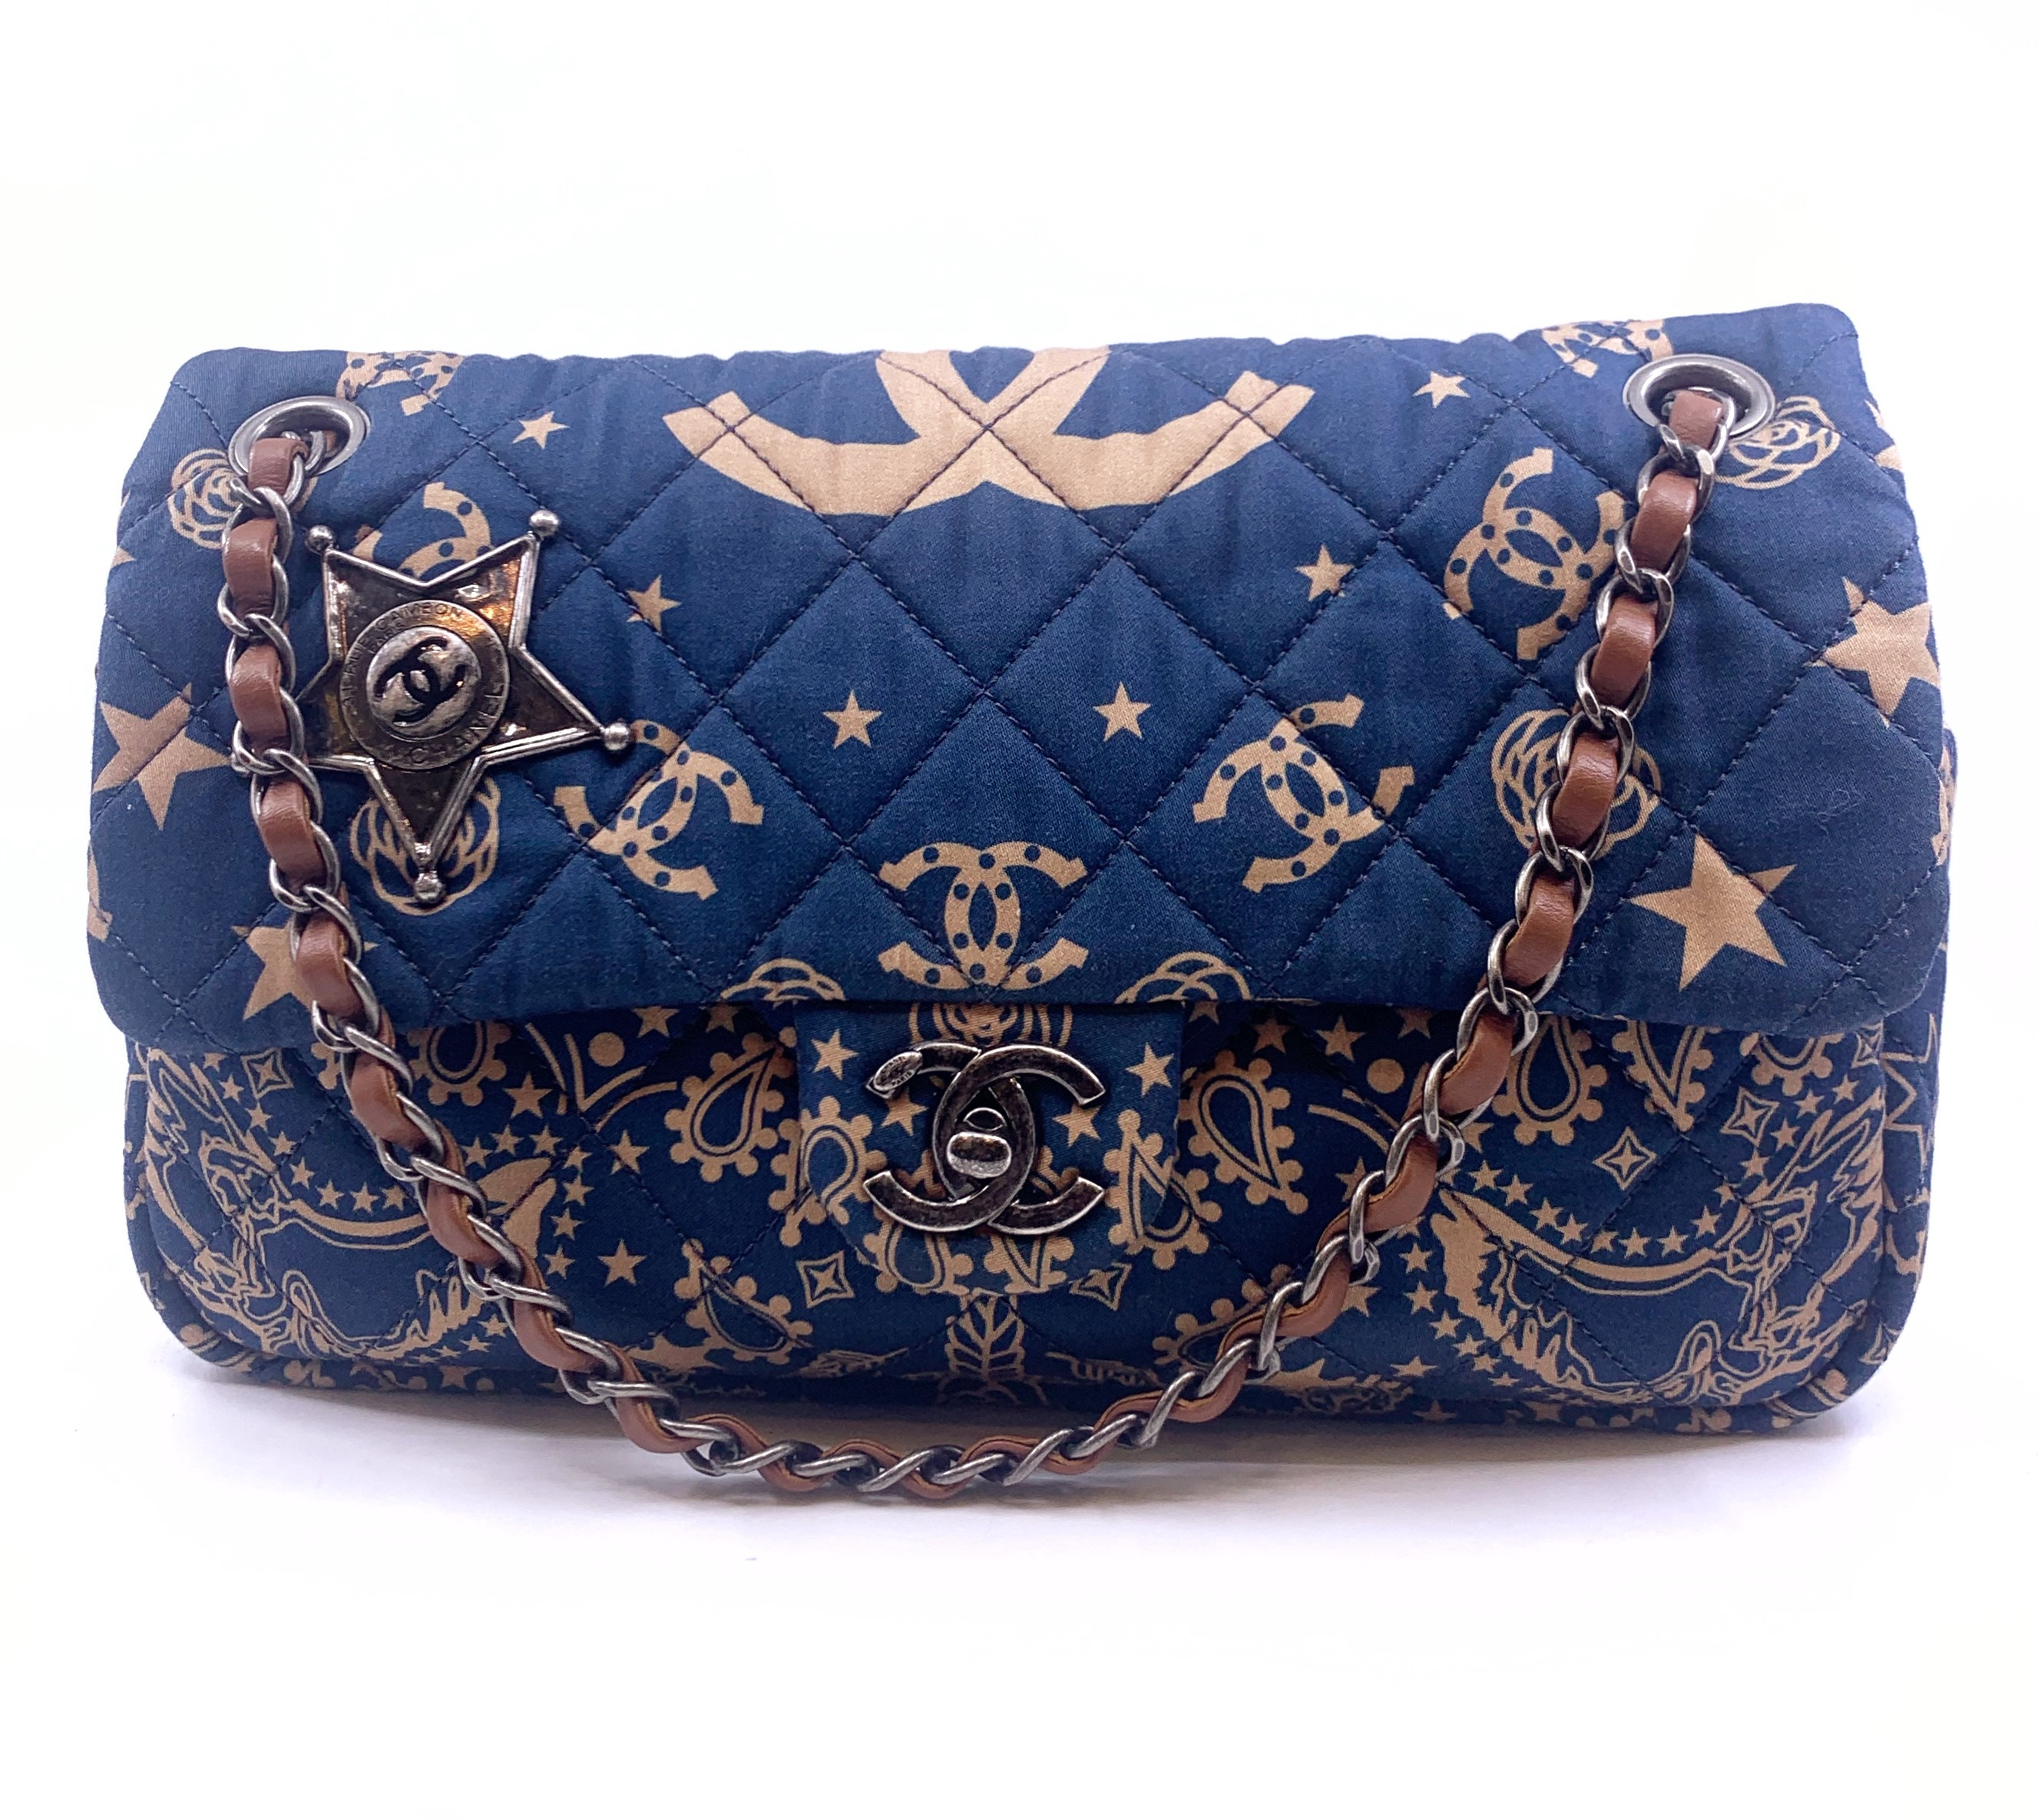 Grand sac à rabat Chanel – KJ VIPS